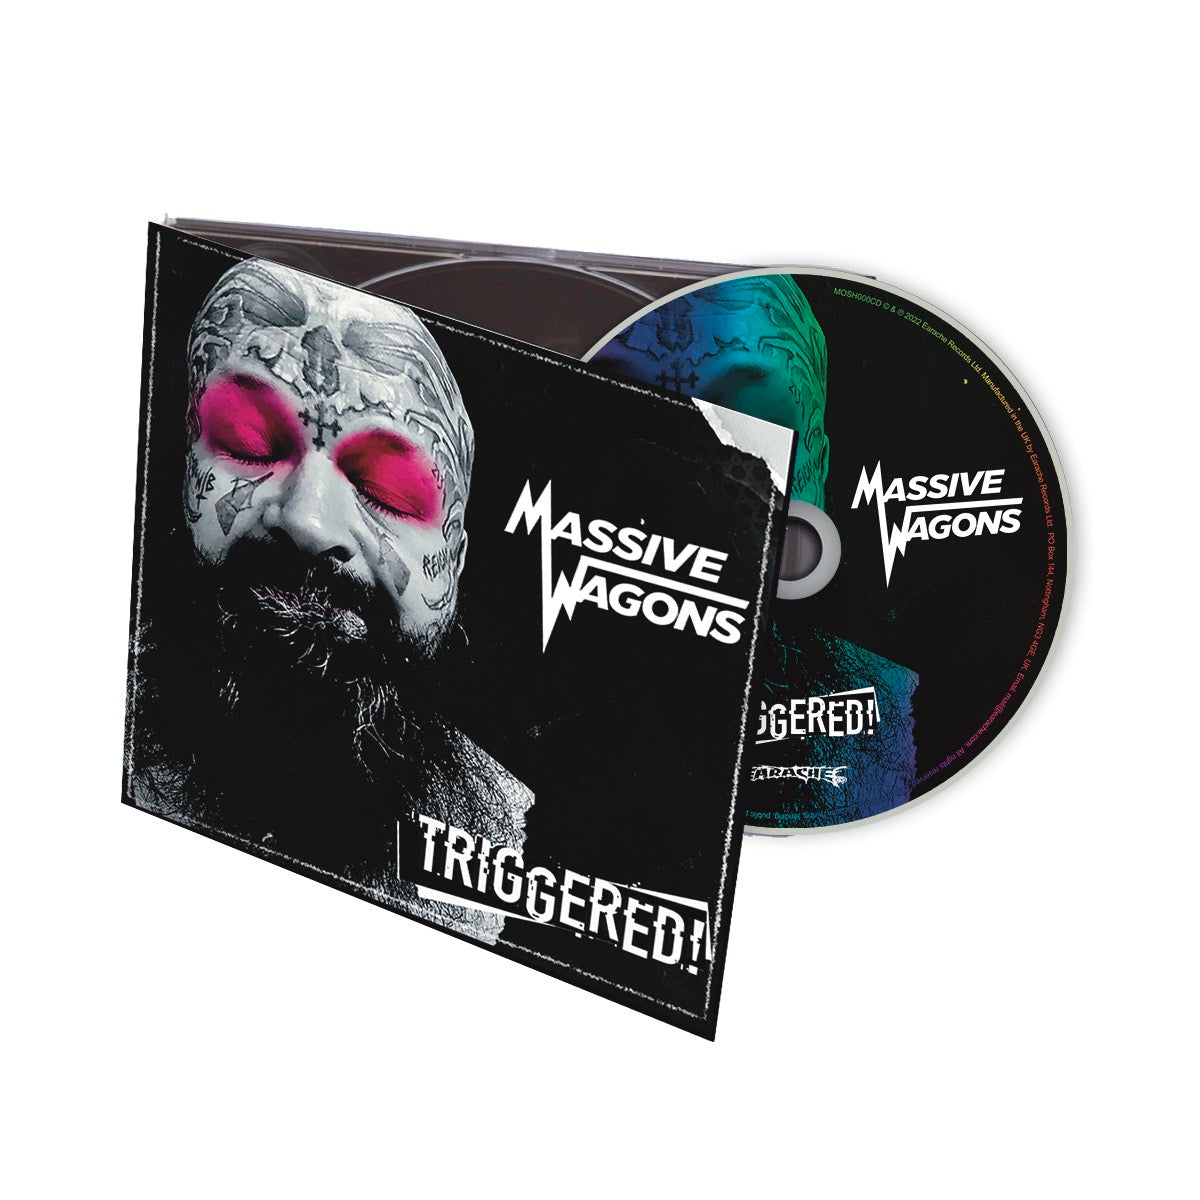 Massive Wagons "TRIGGERED!" CD